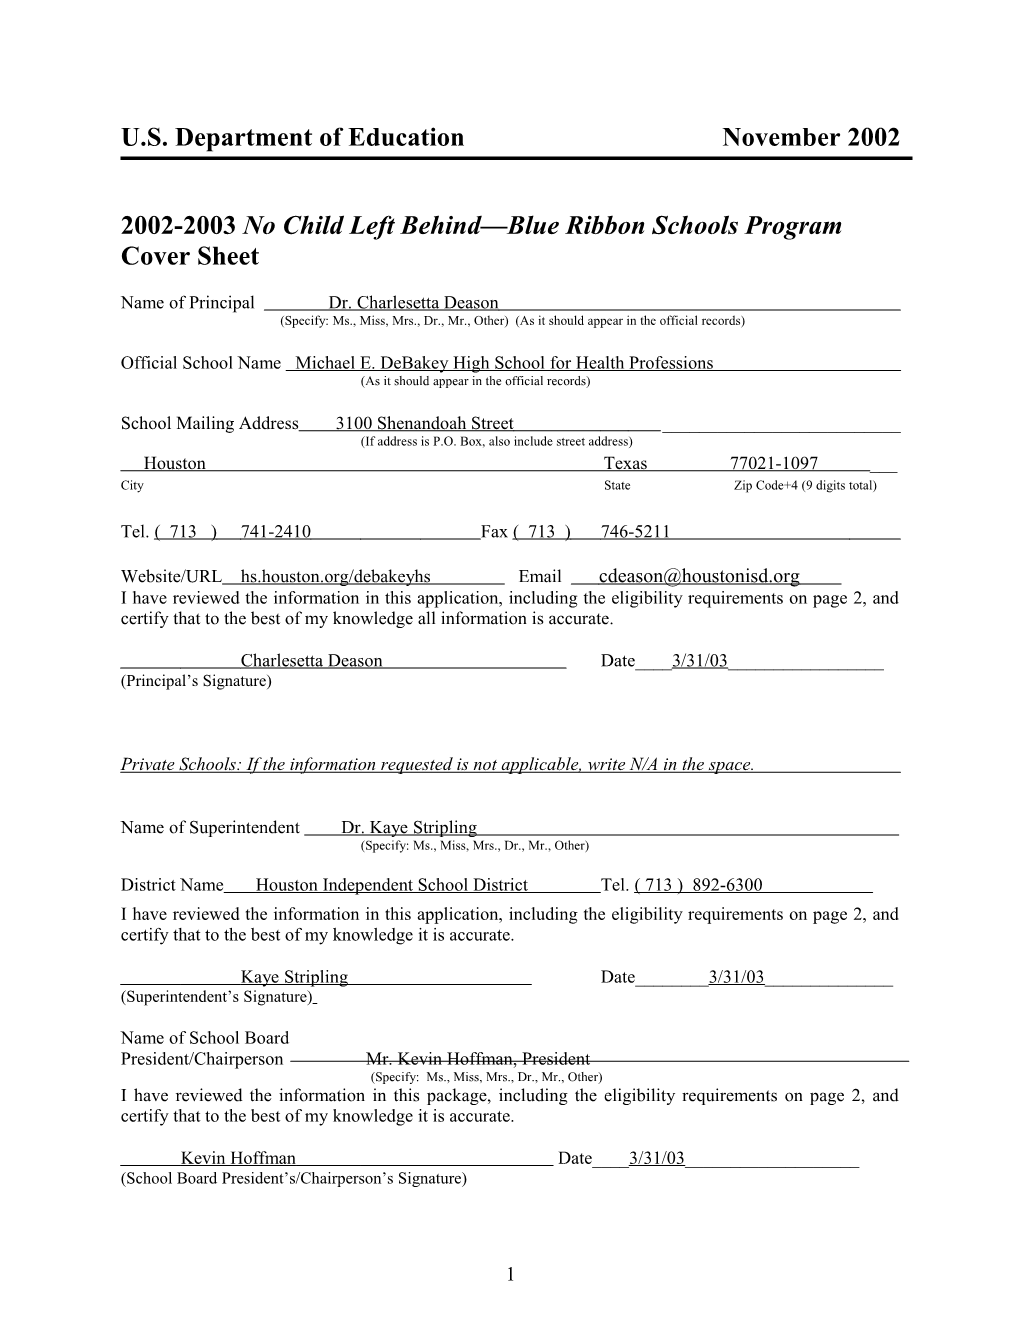 Michael E. Debakey High School for Health Professions 2003 No Child Left Behind-Blue Ribbon